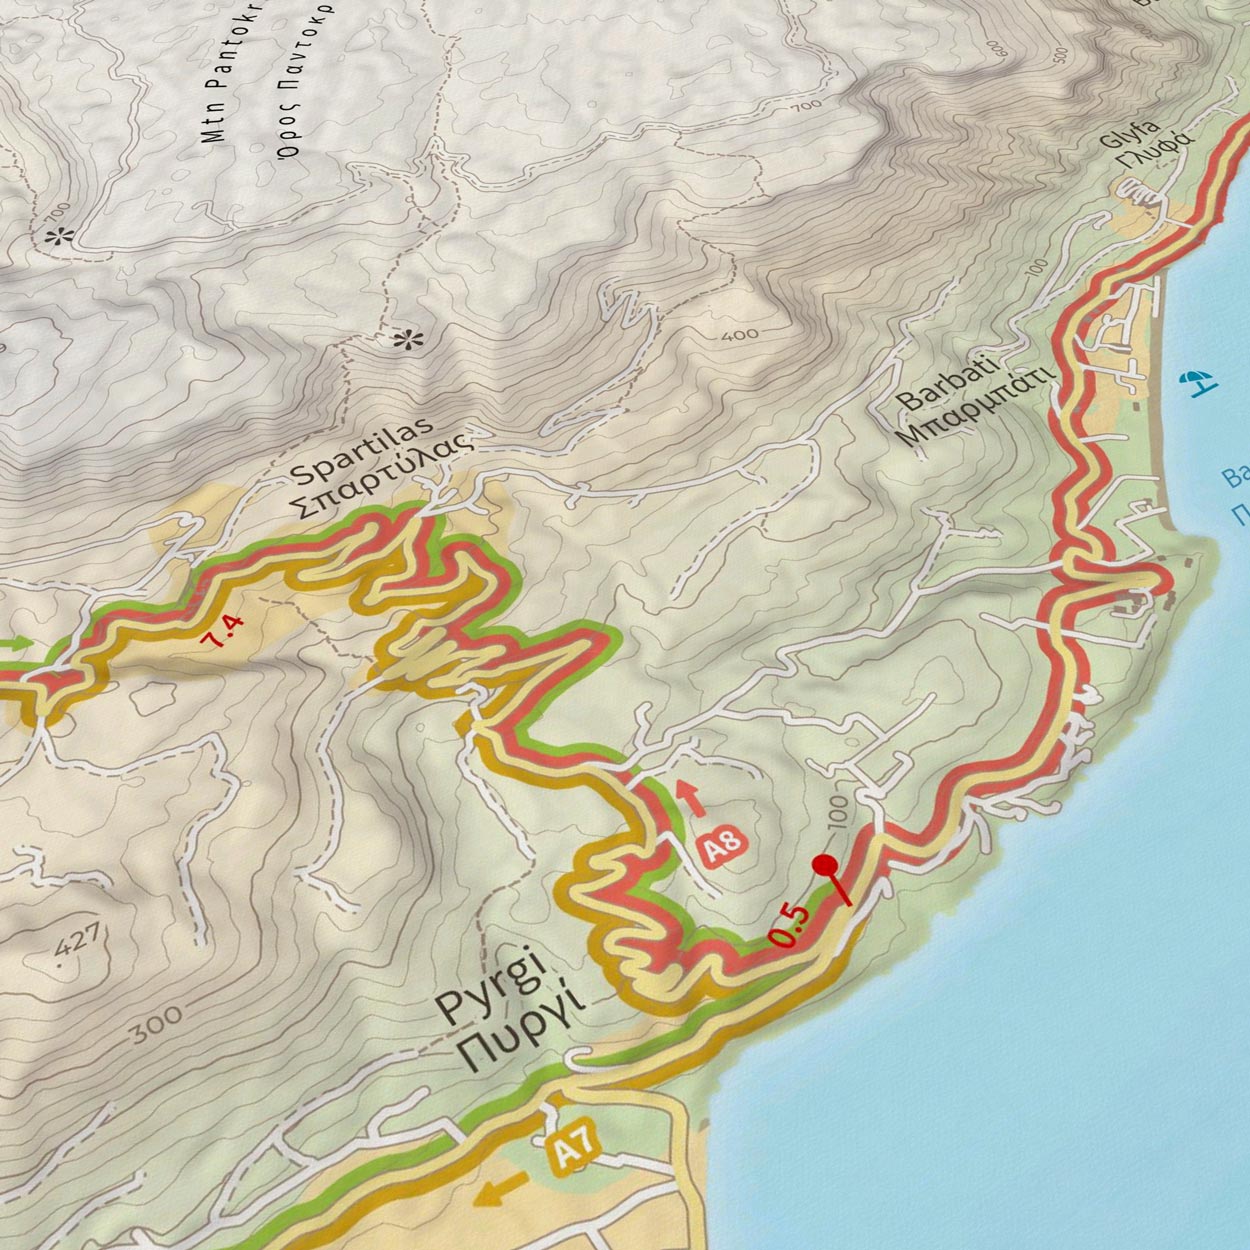 S-Bikes Cycle Corfu - Asphalt Routes